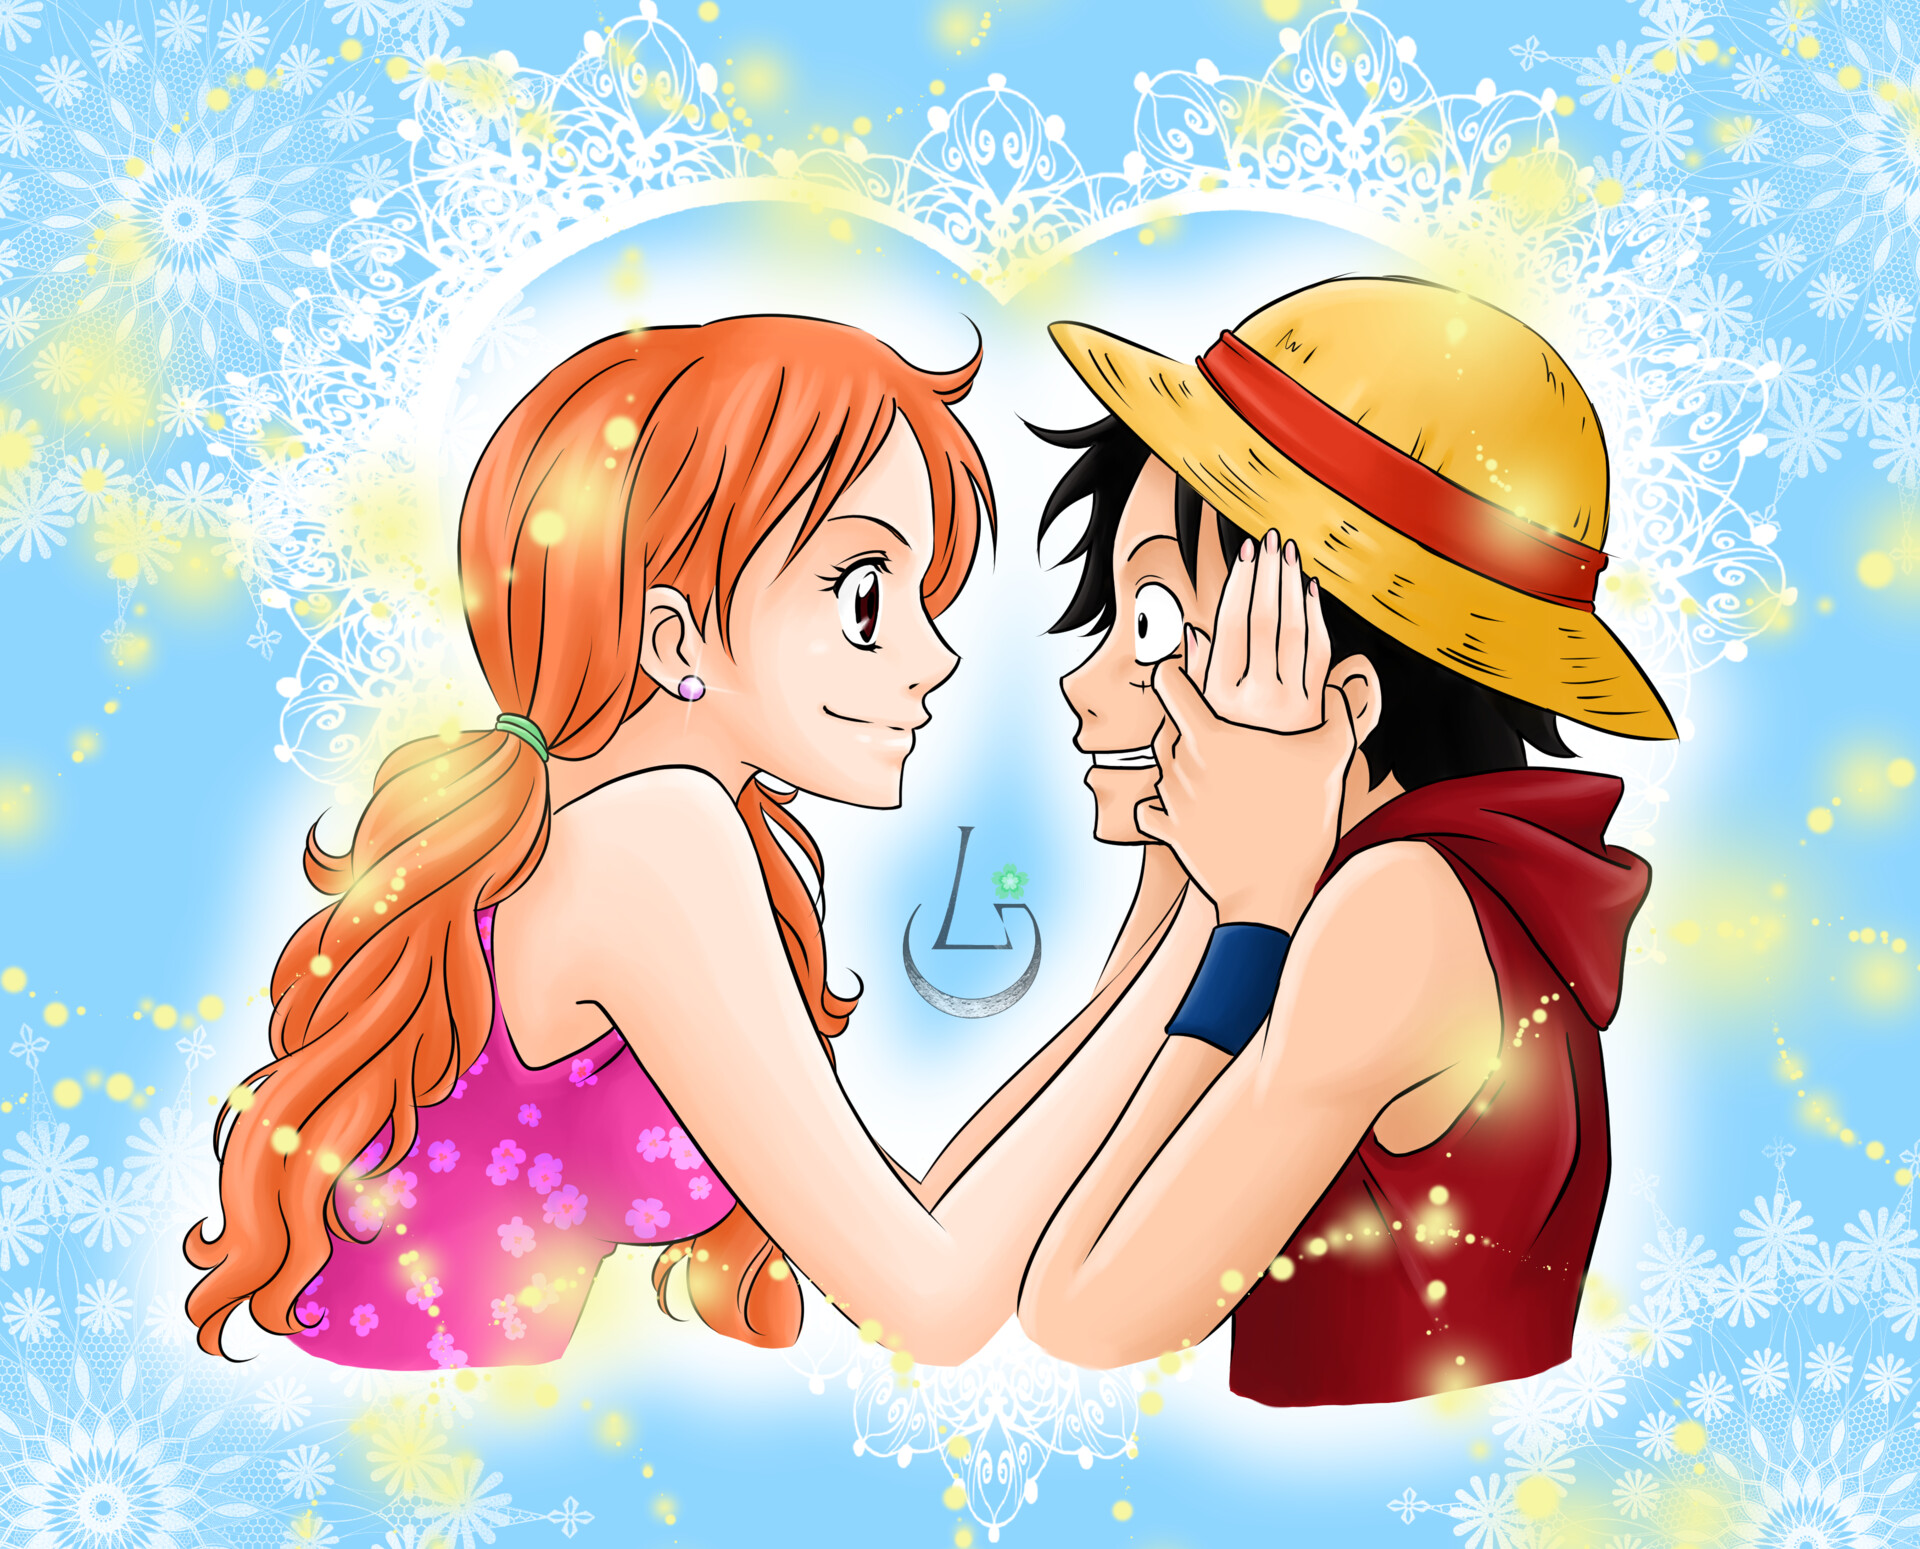 ArtStation - One Piece - Nami